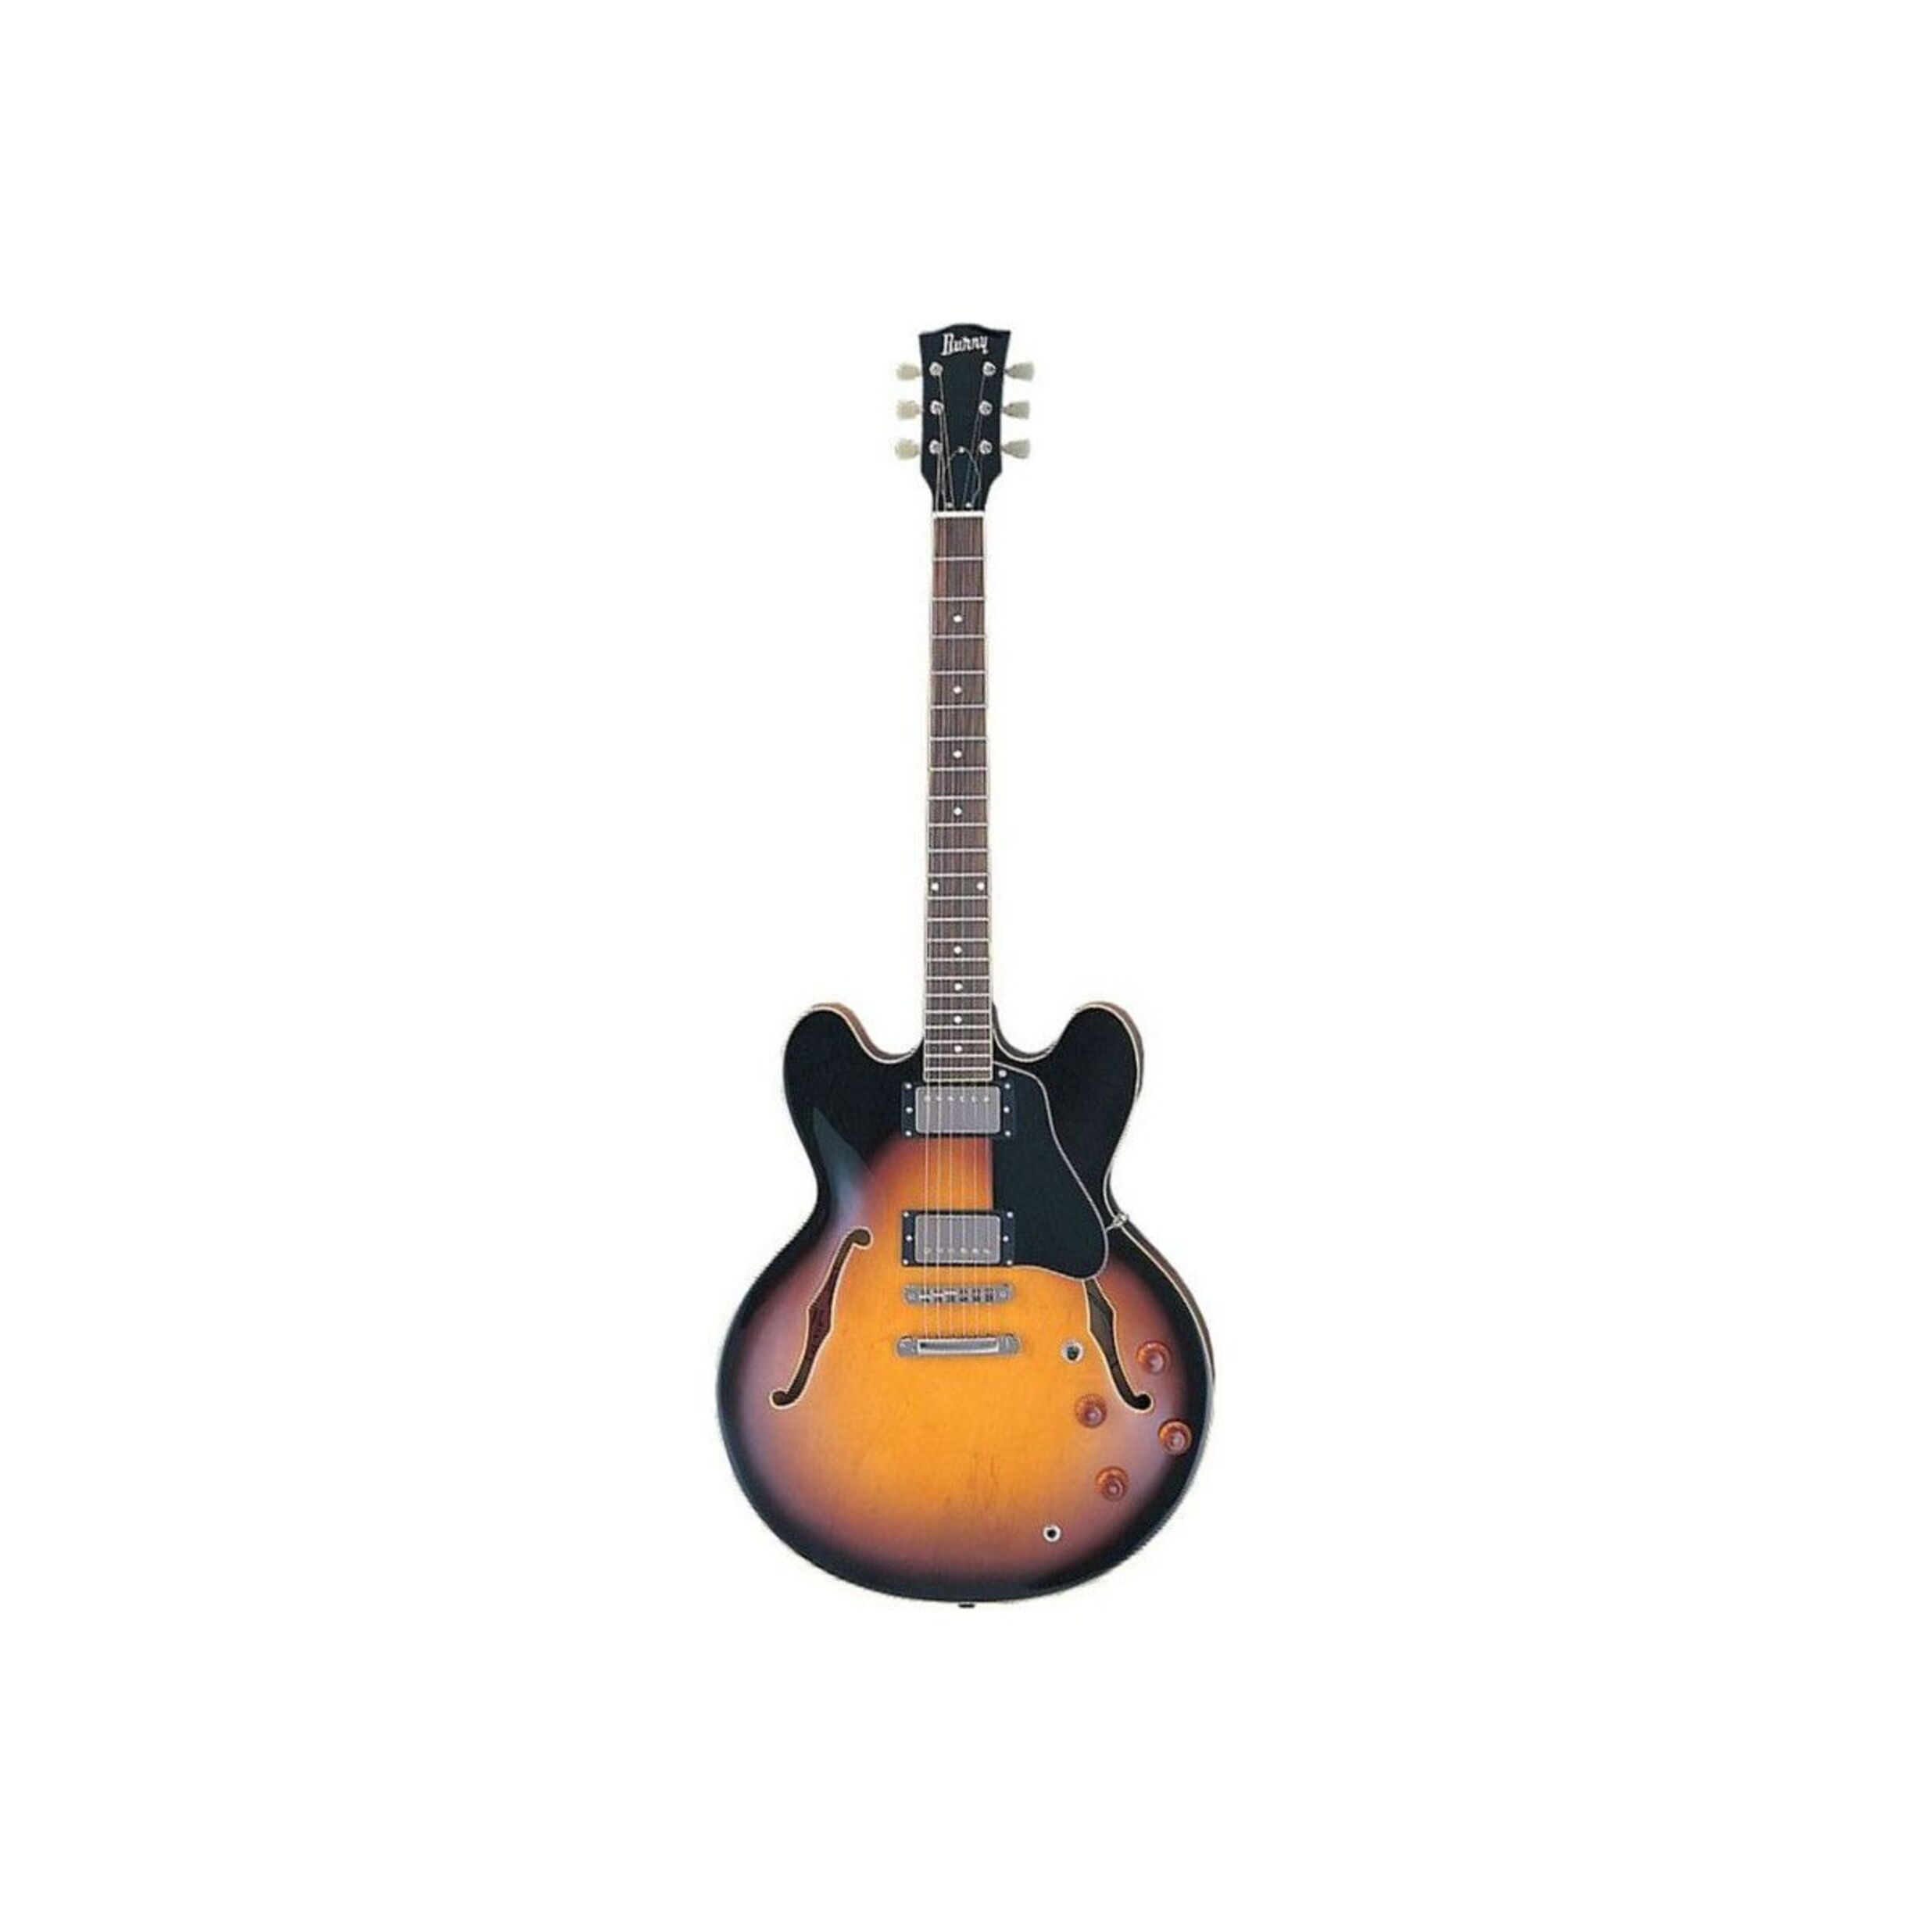 Полуакустические гитары Burny RSA70 BS (кейс в комплекте) полуакустические гитары ibanez ag95qa dbs